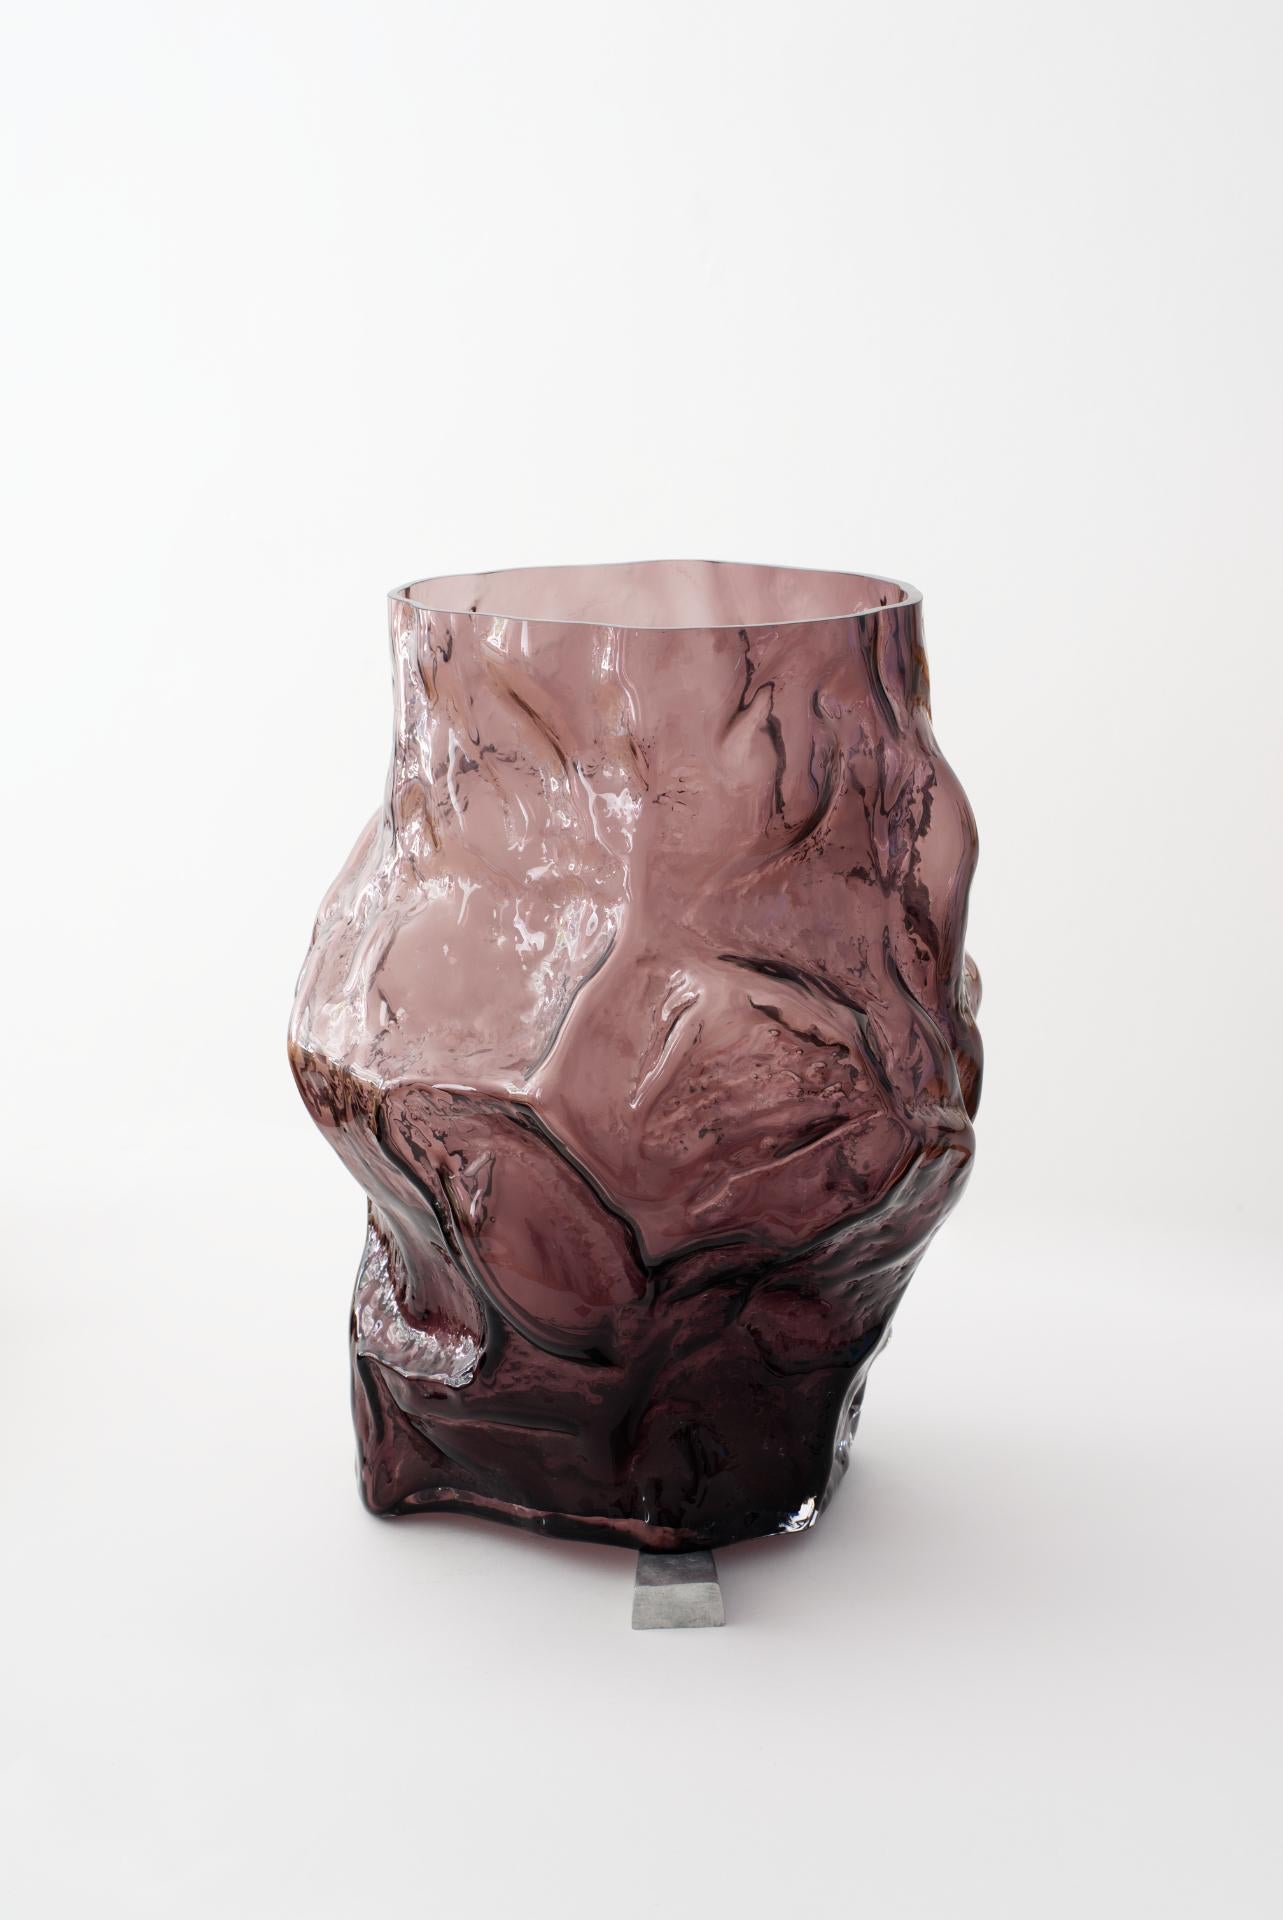 Post-Modern Contemporary Design Unique Glass 'Mountain' Vase by Fos, Purple